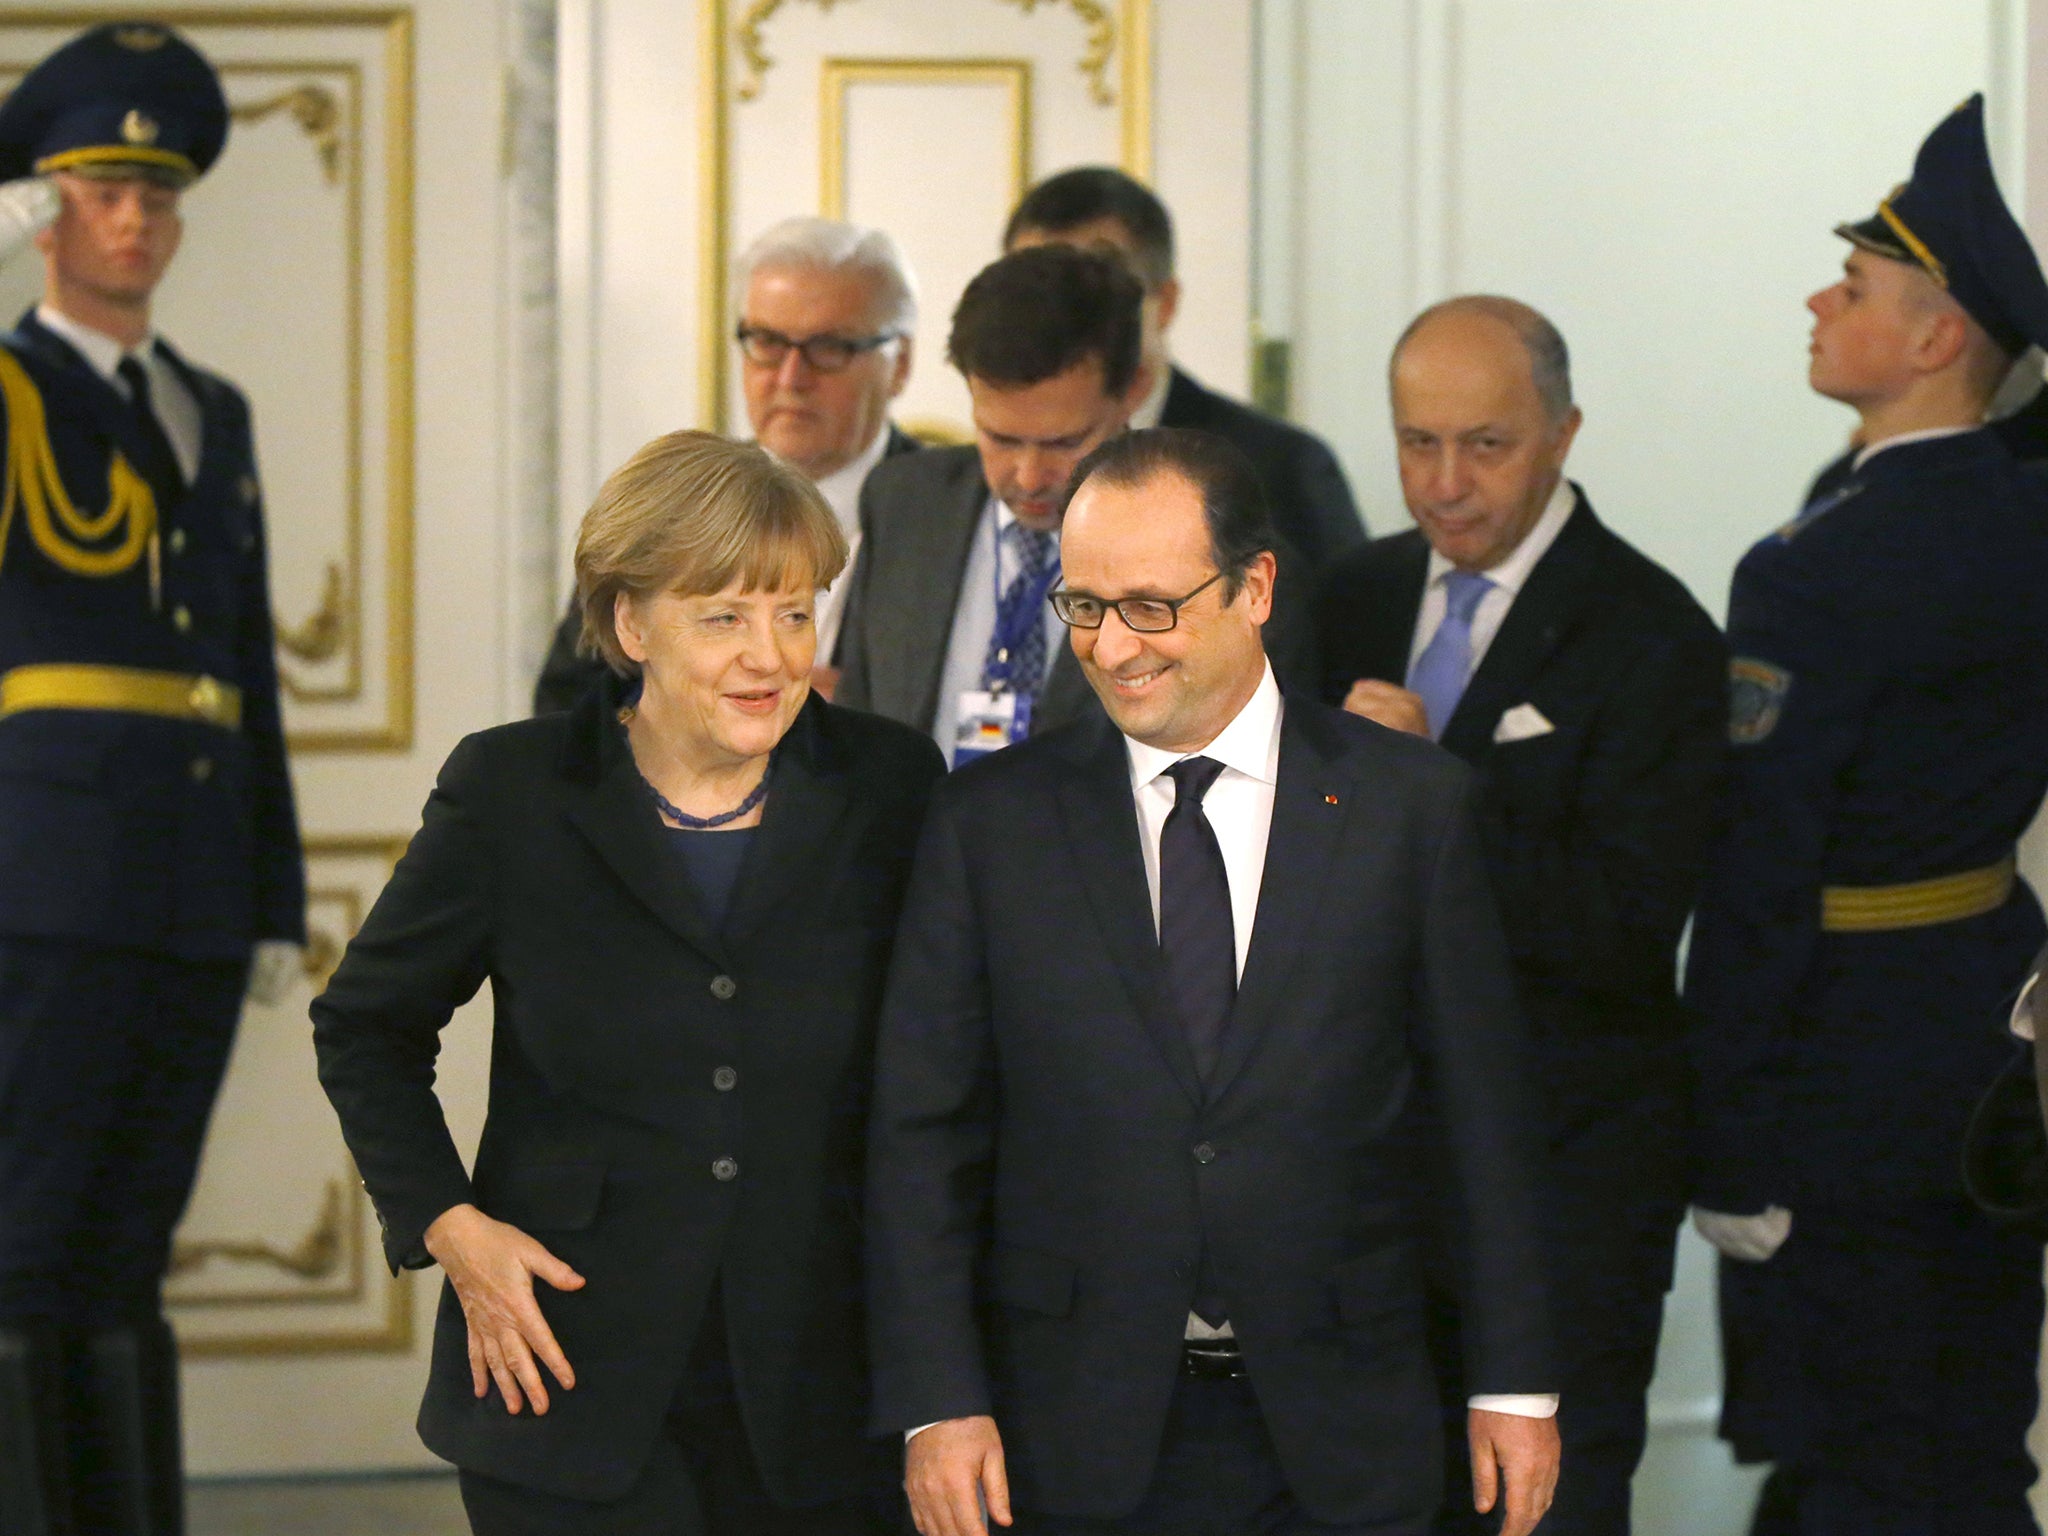 Angela Merkel and François Hollande emerge from their marathon talks in Minsk yesterday